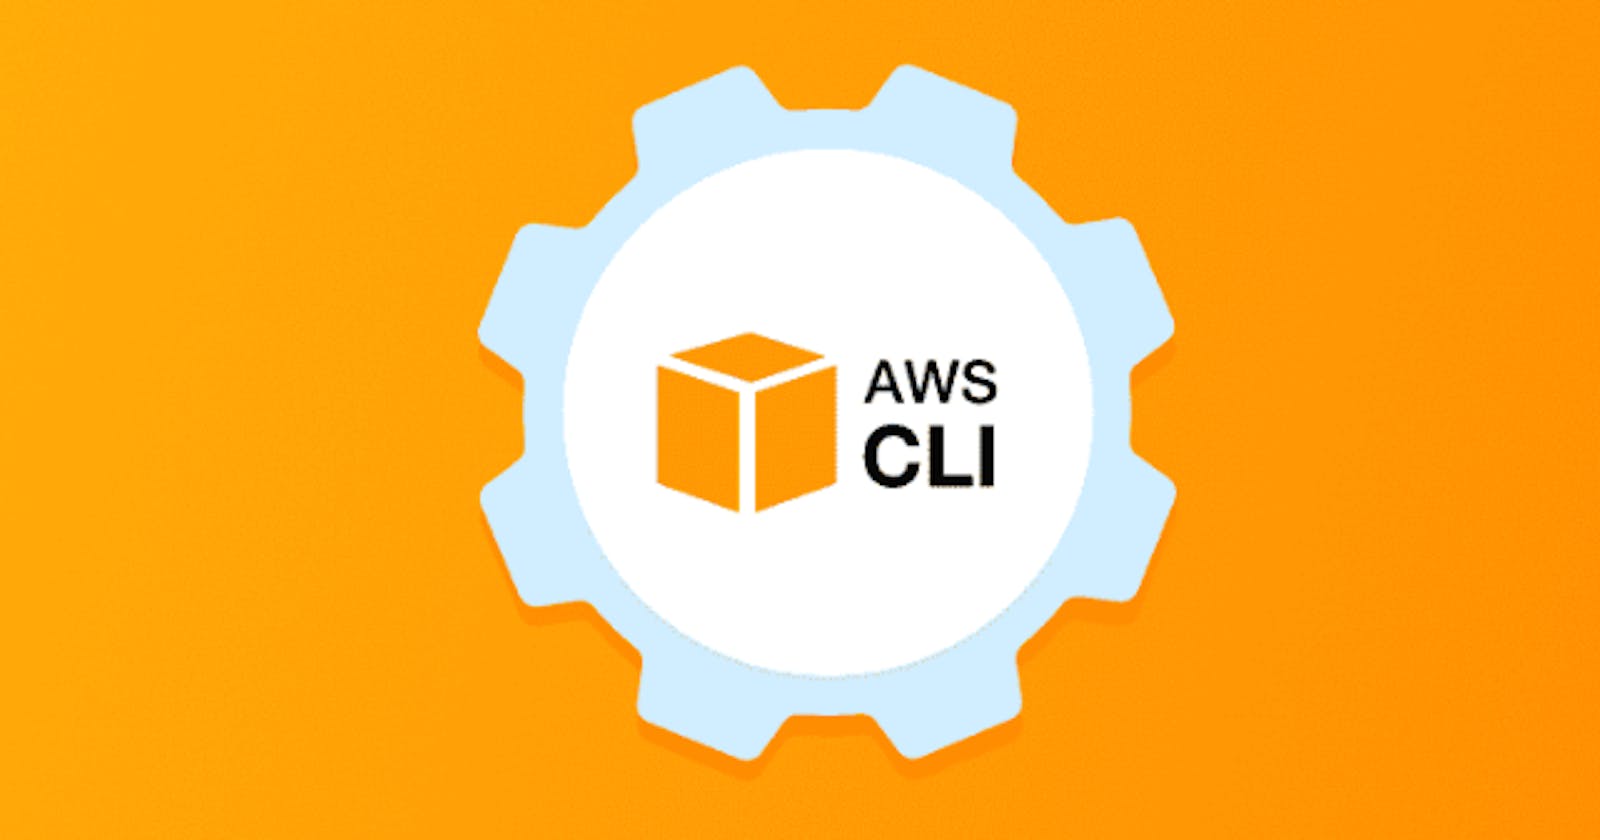 AWS CLI - Installation, configuration
(Part-1)